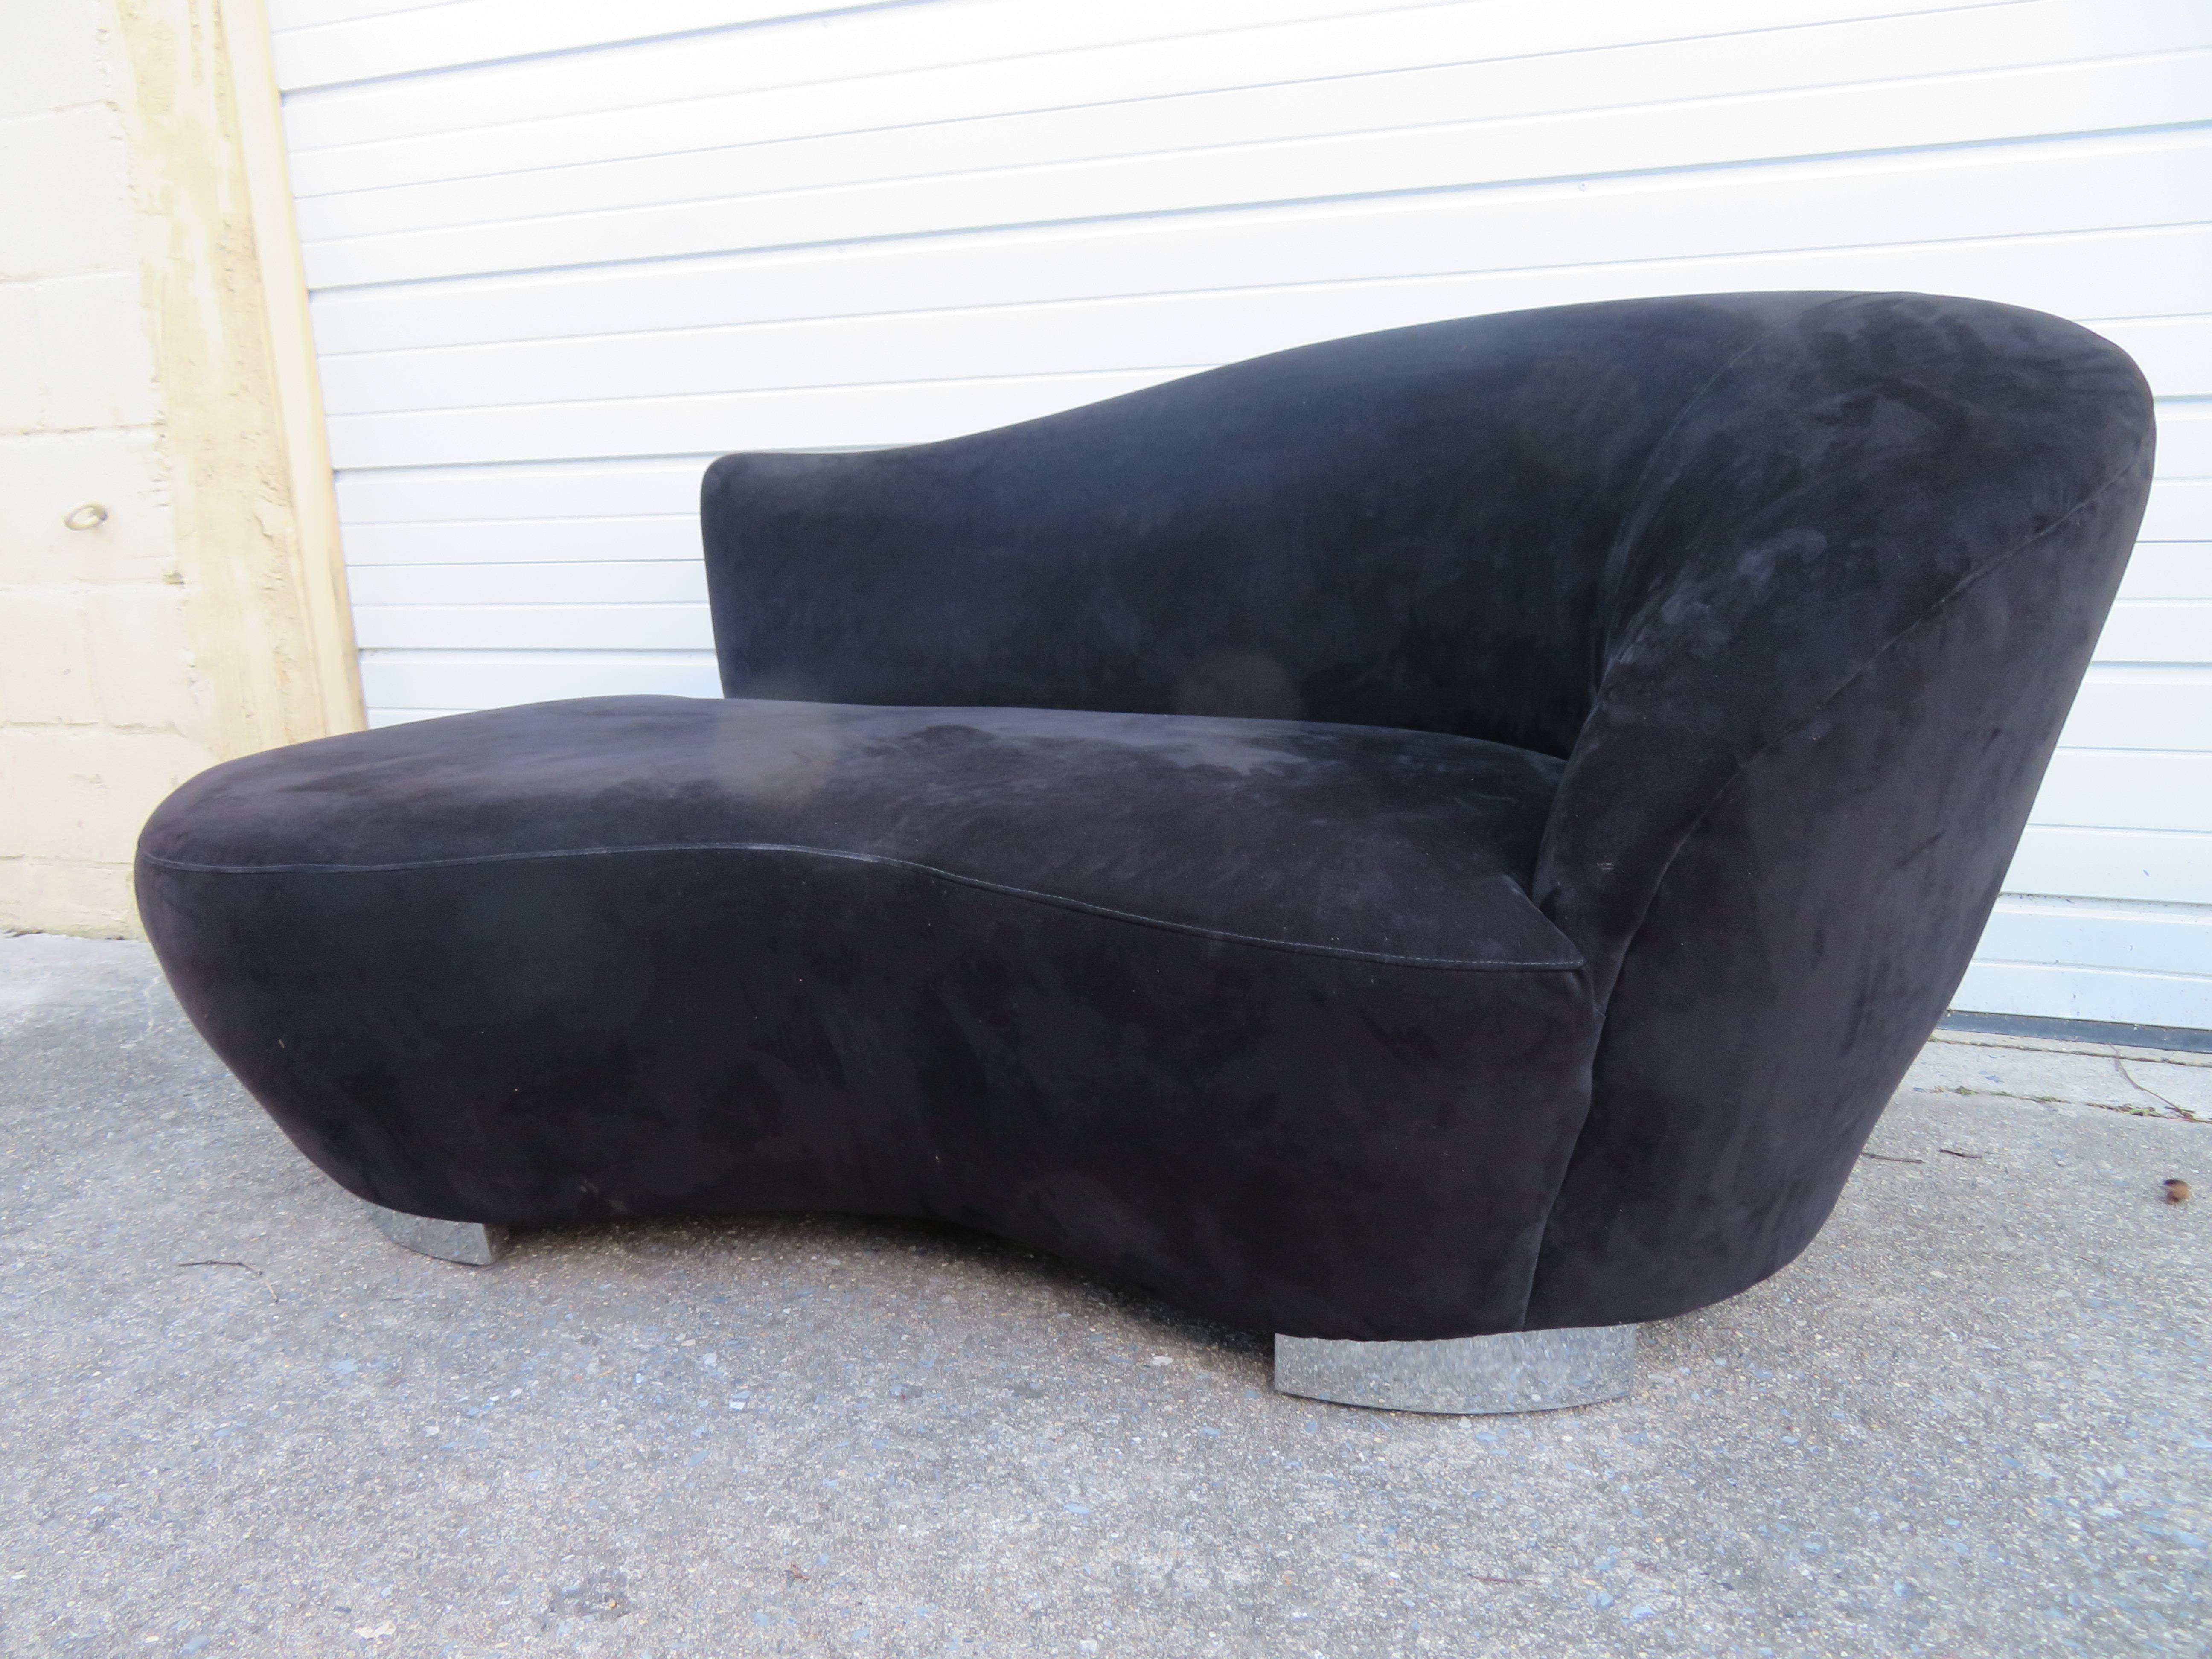 Gorgeous black ultra-suede kidney shaped petite cloud sofa loveseat designed by Vladimir Kagan. This sofa measures 30